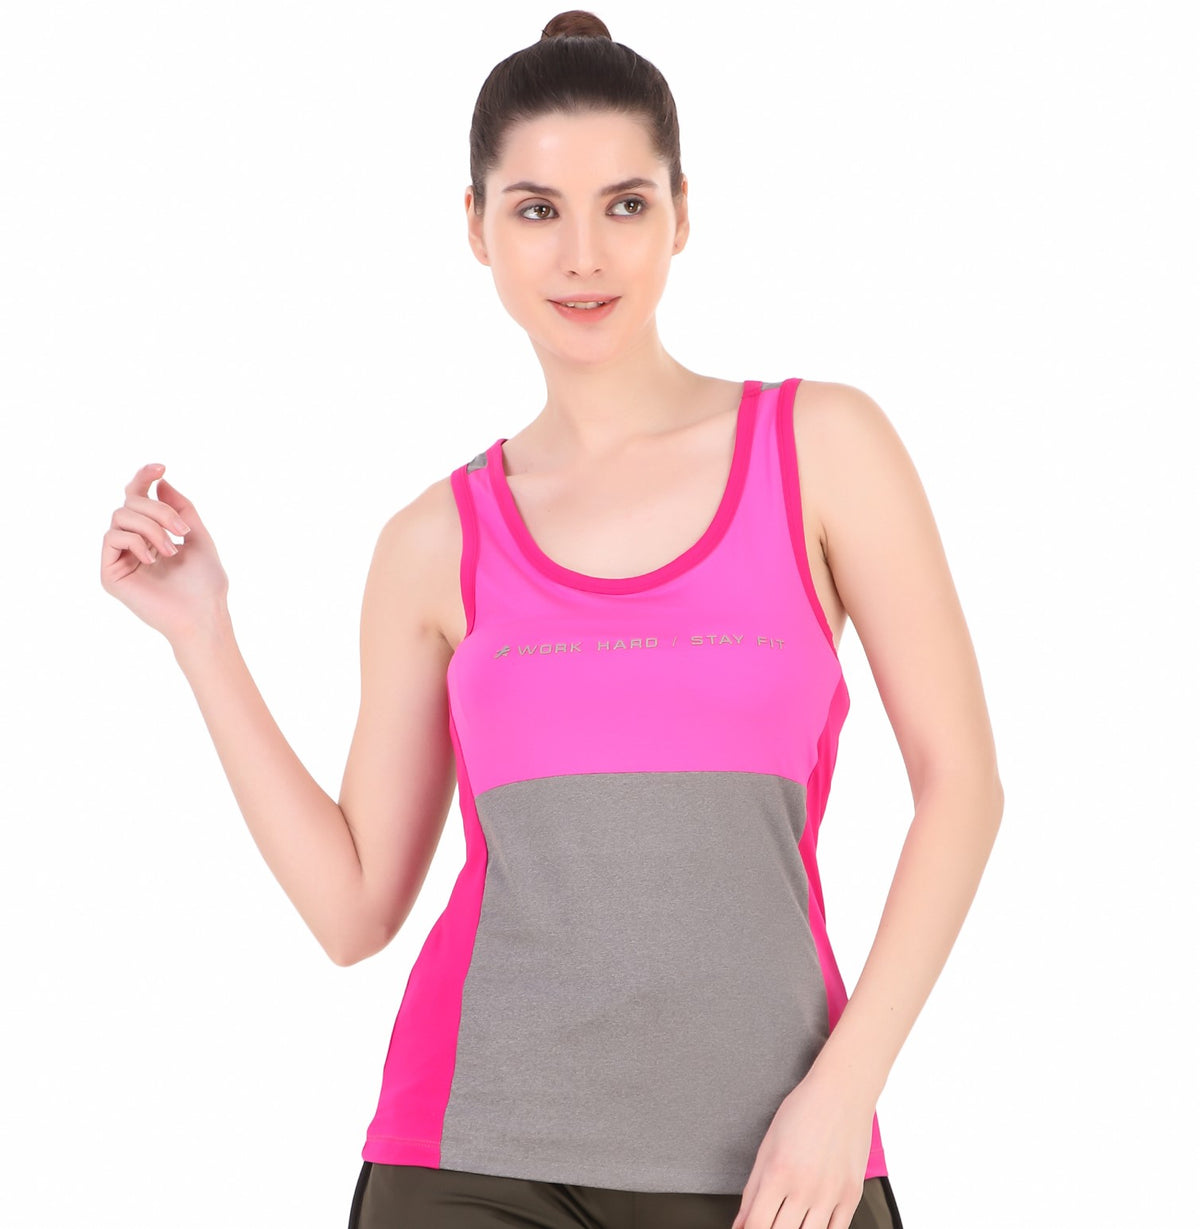 T-Back Sleeveless Tshirt For Women (Pink)